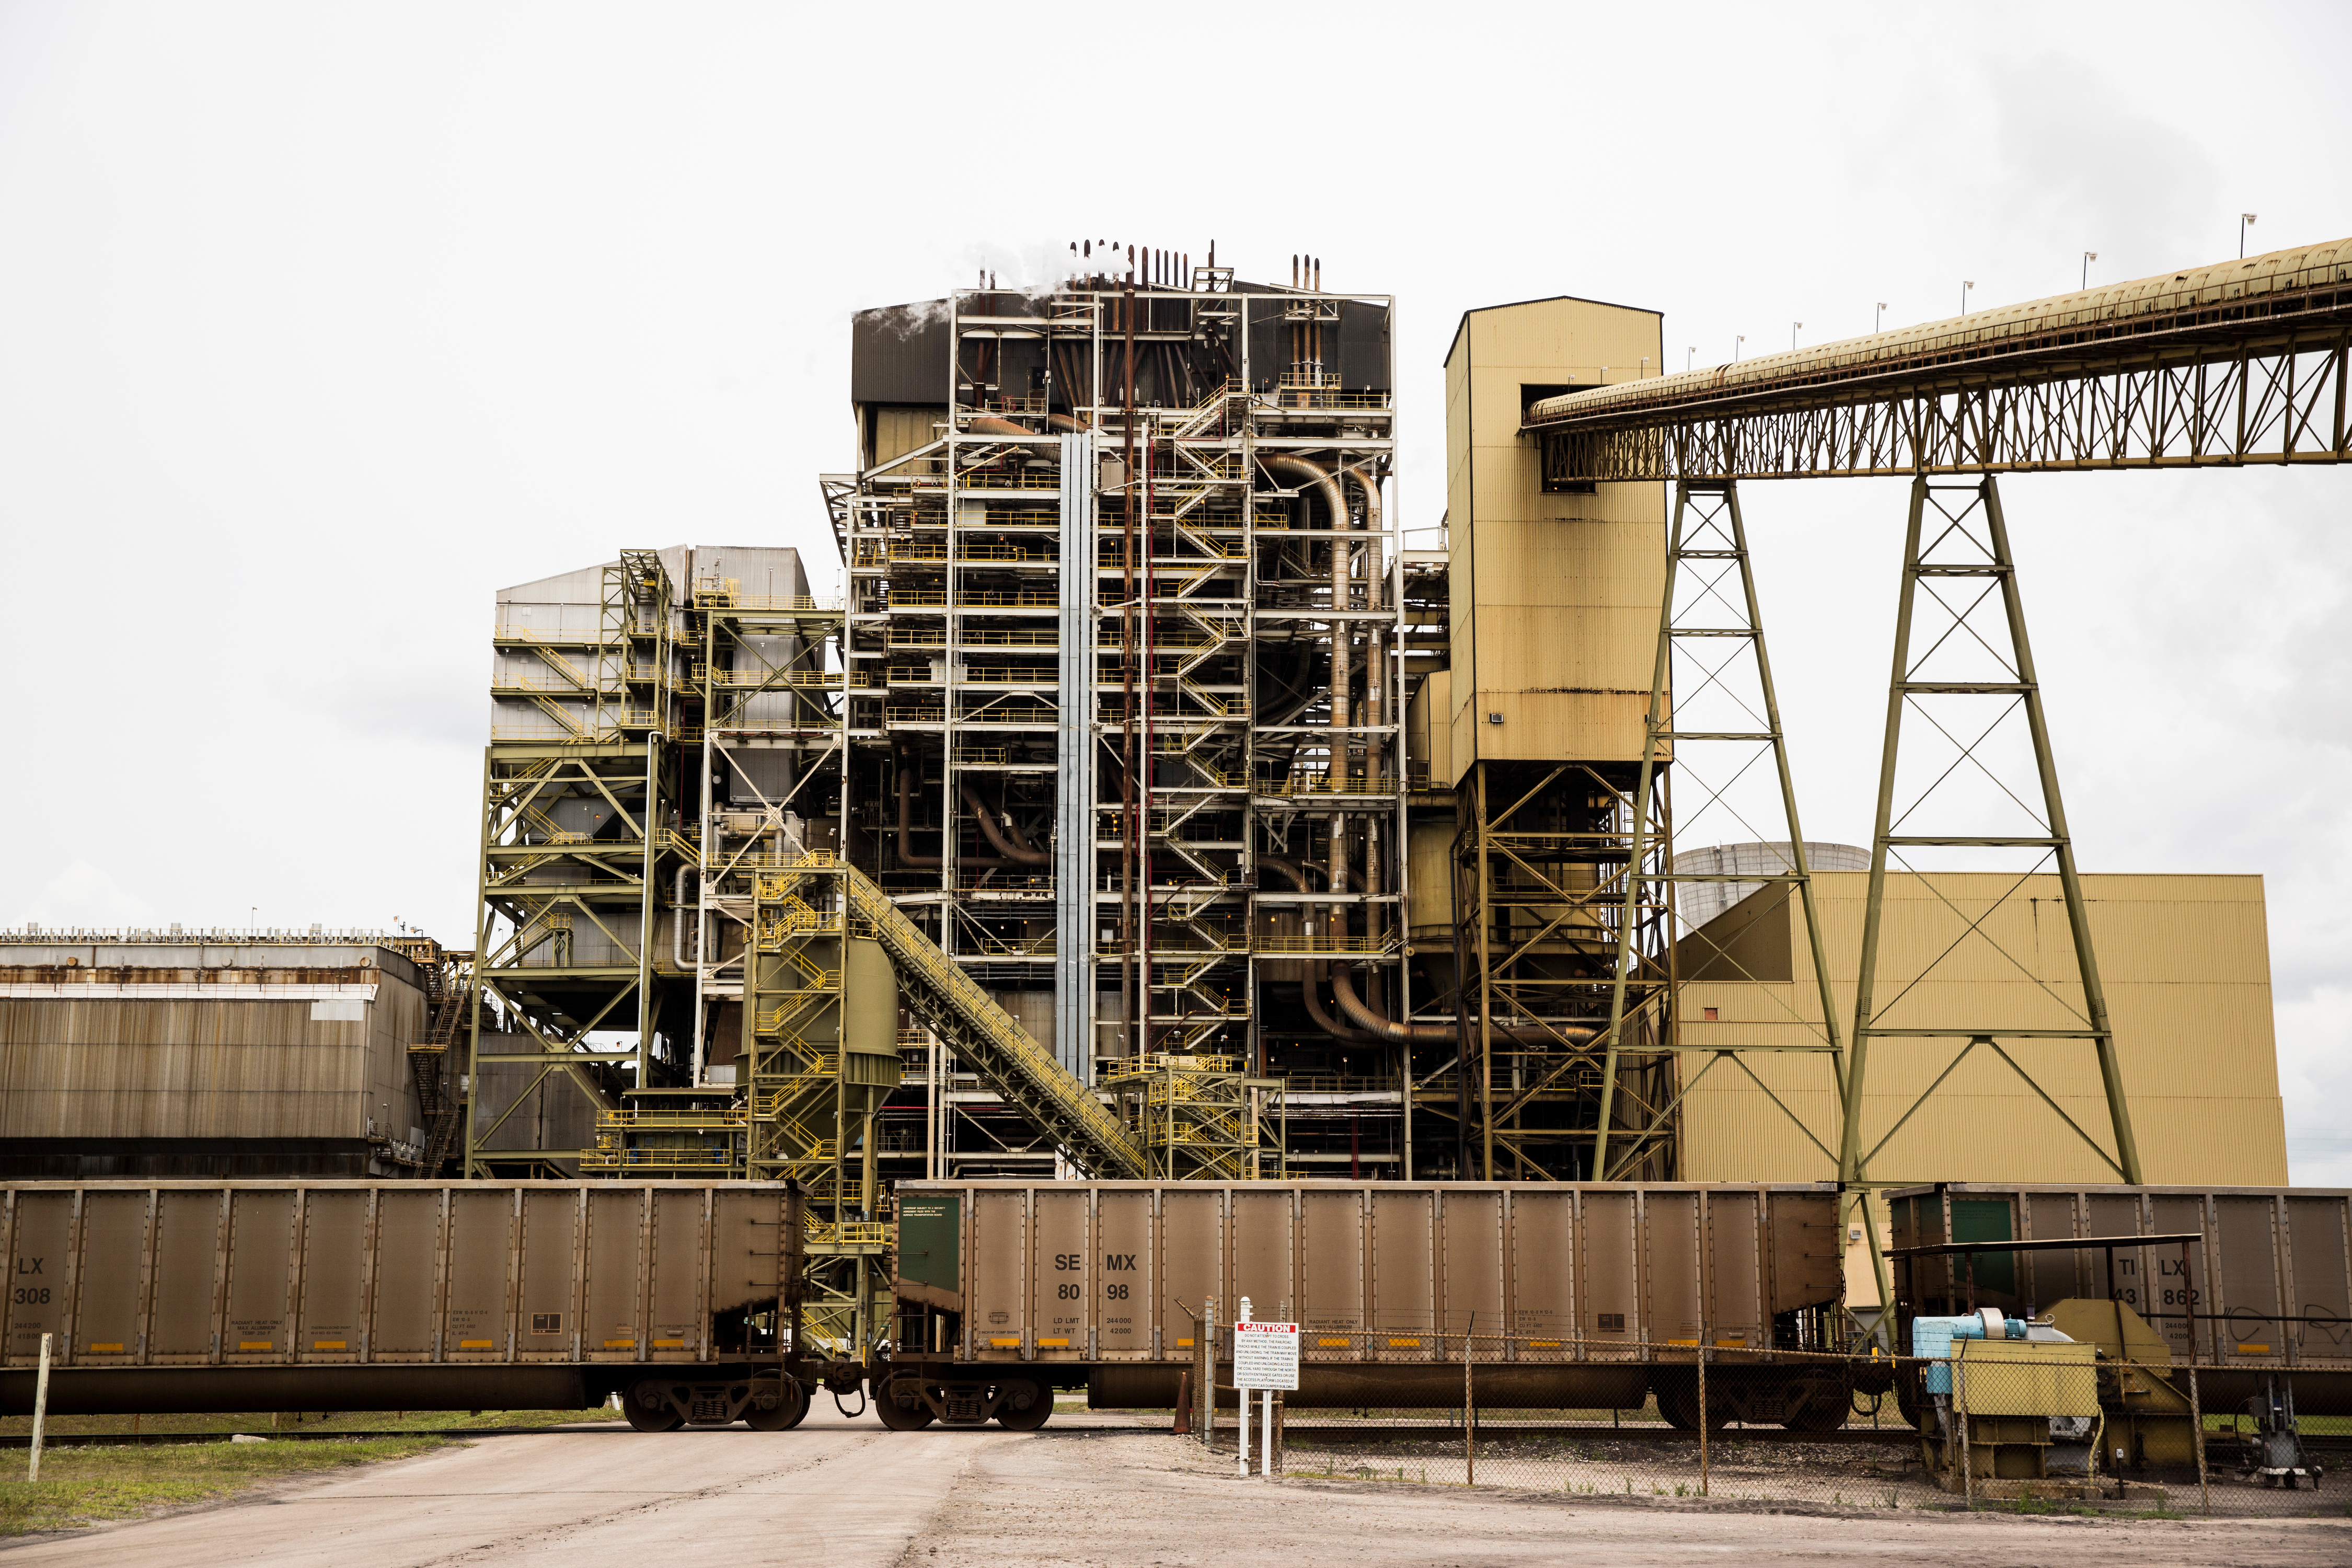 Seminole Electric Cooperative’s coal-based power station in Polatka, Florida, faces closure by 2020 under EPA’s original Clean Power Plan. (Photo By: Garrett Hubbard Studios)